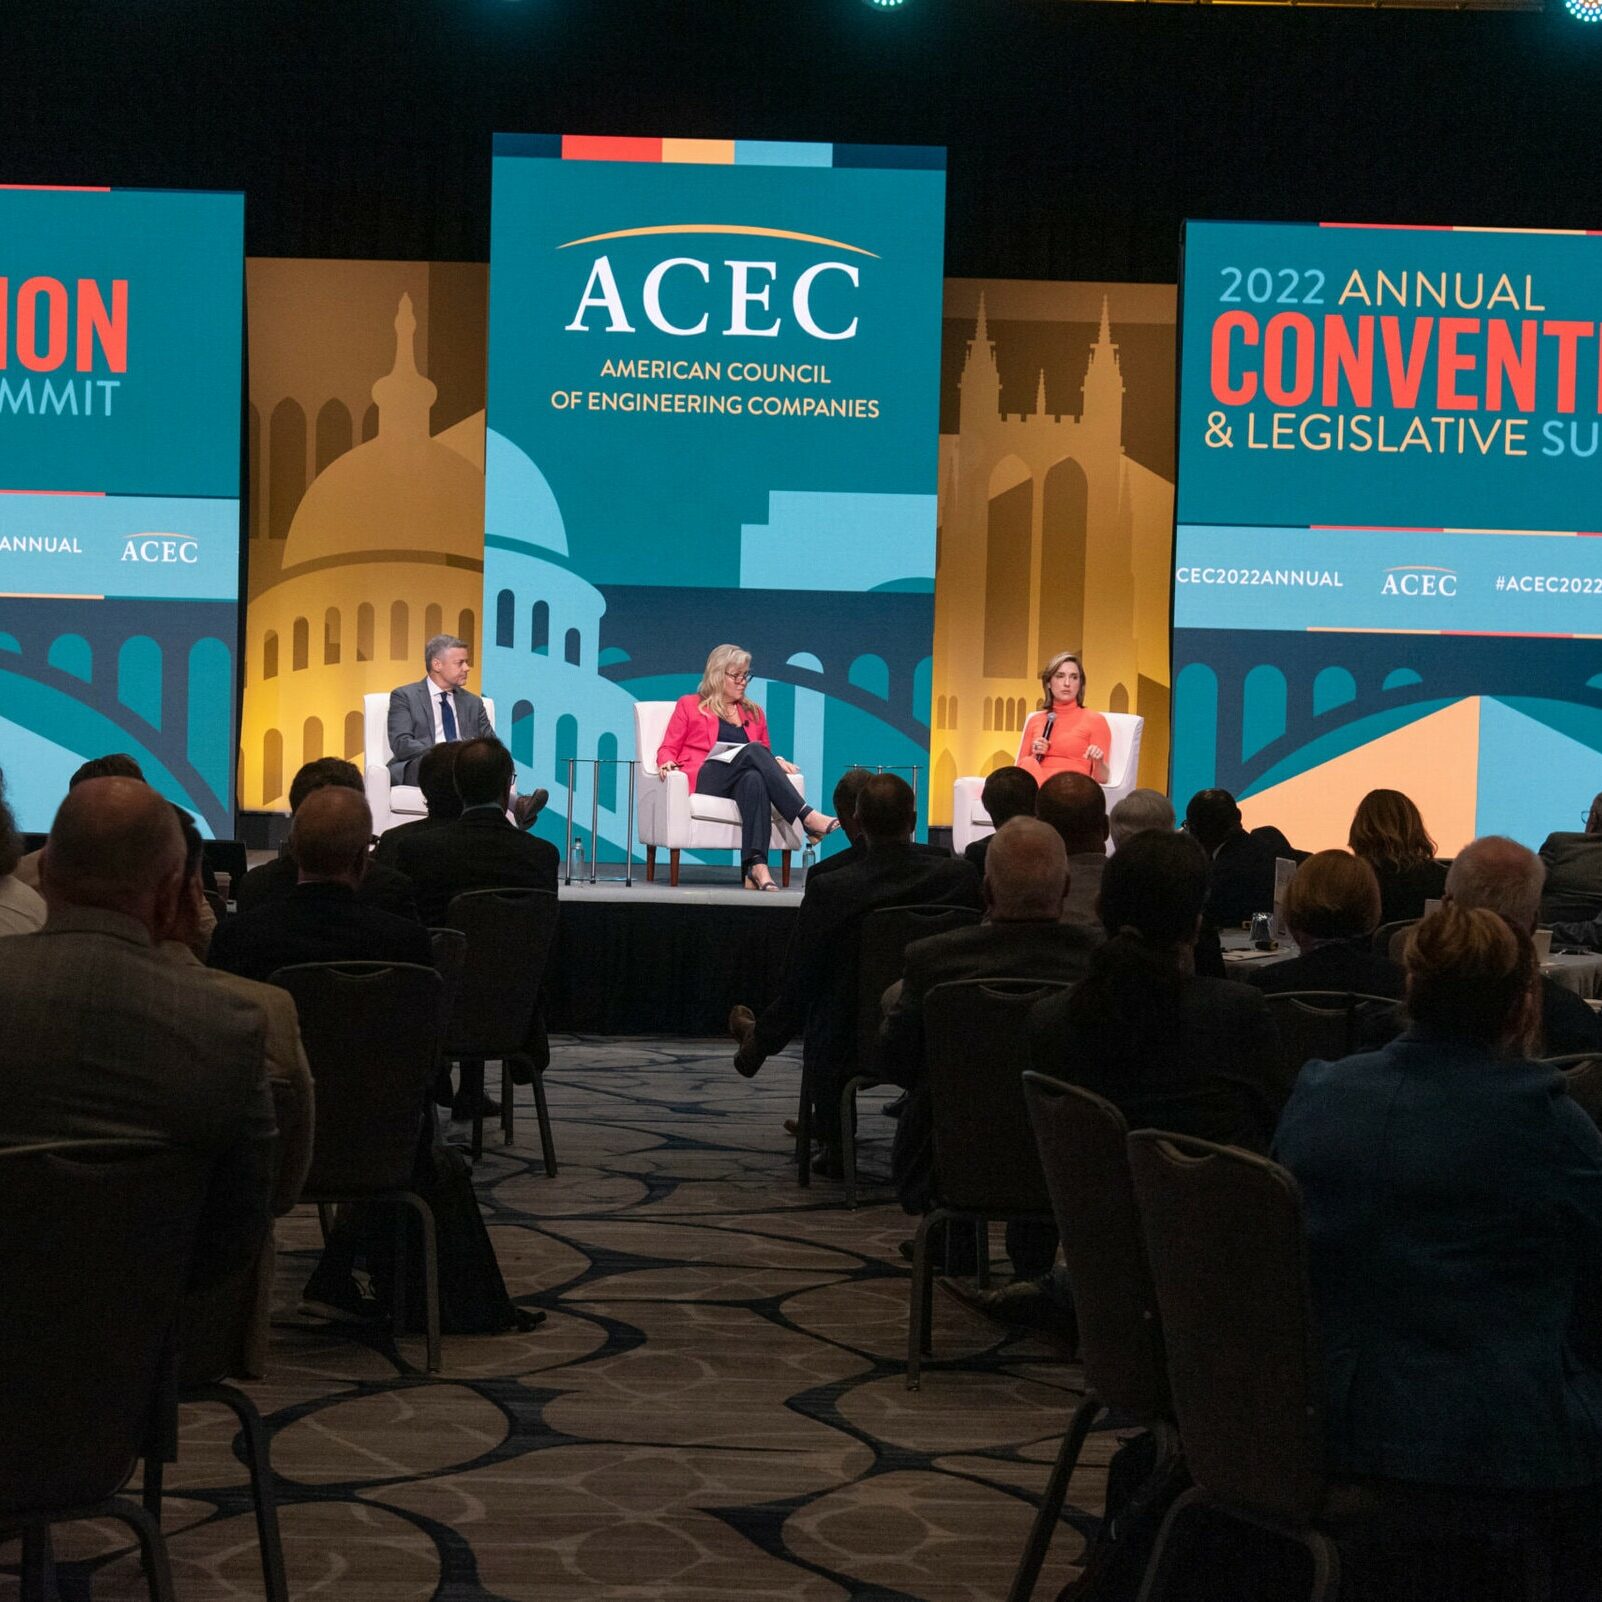 Keynote Discussion during ACEC Convention & Legislative Summit